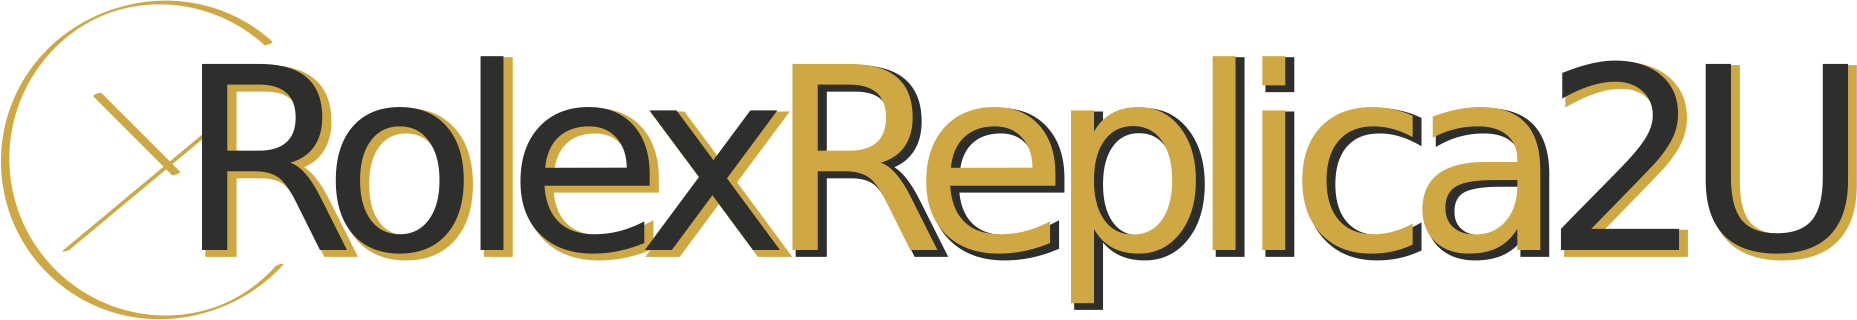 Rolex replica specialist